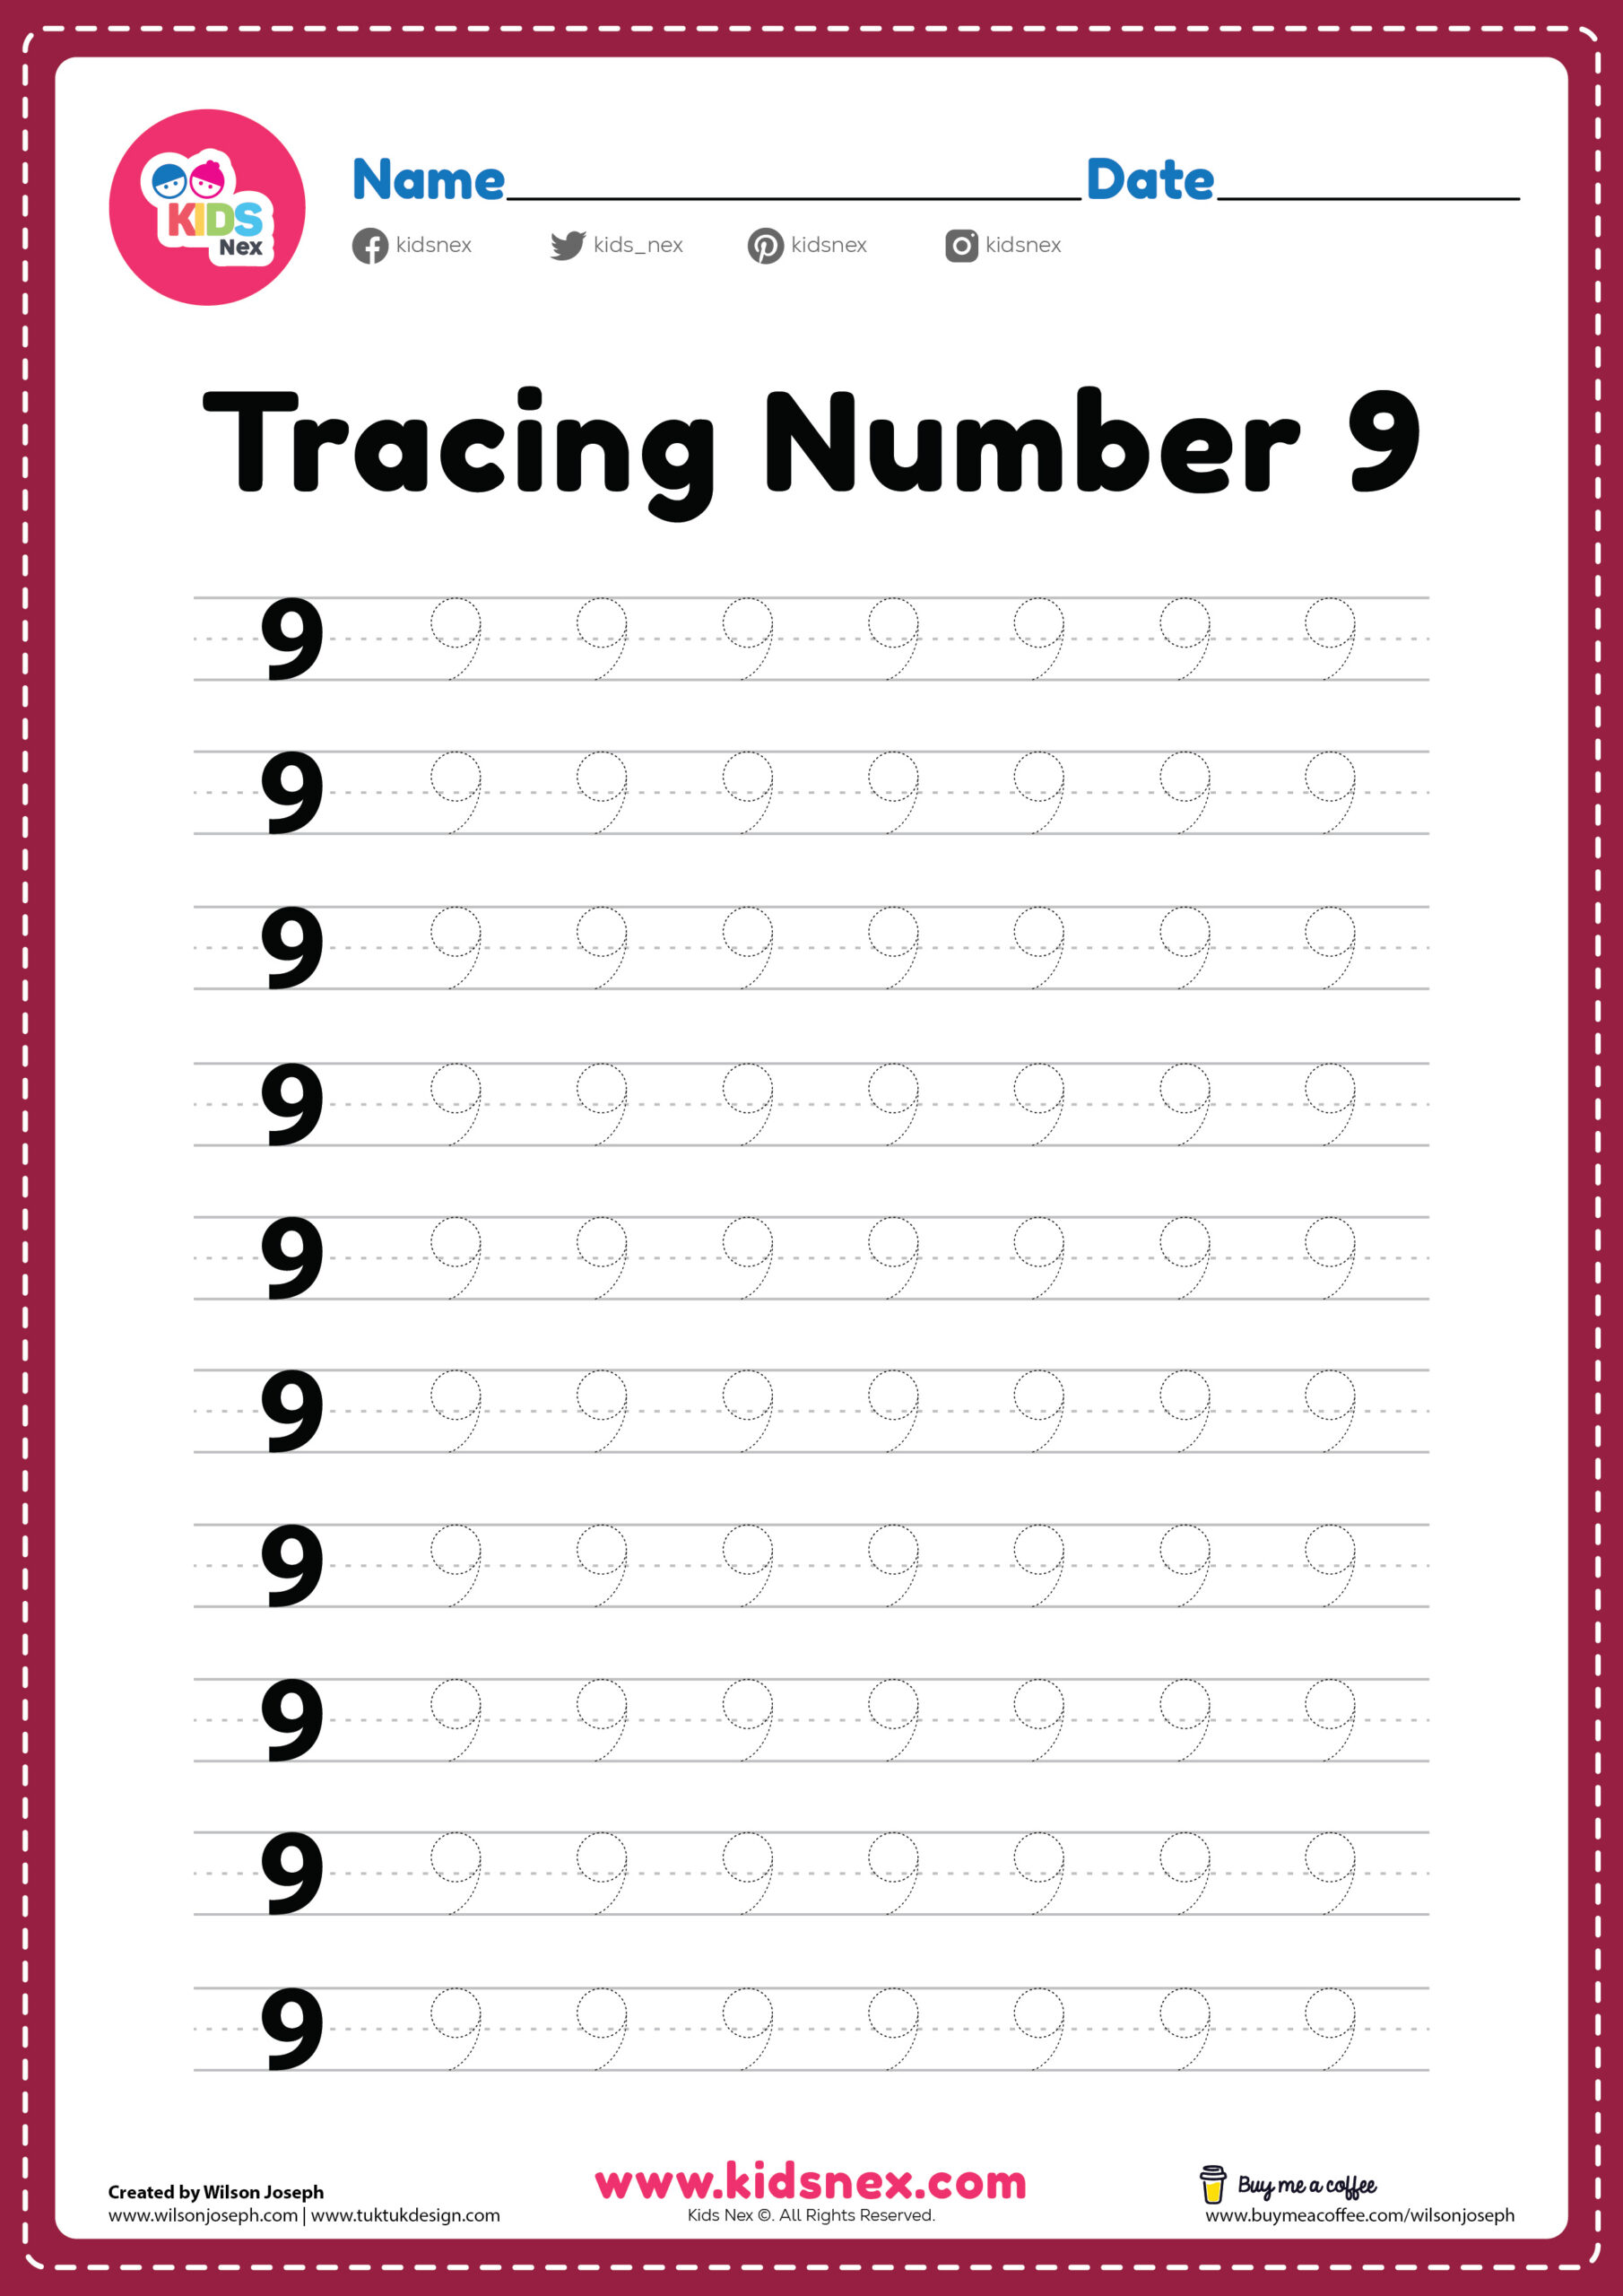 tracing-number-9-worksheet-free-printable-pdf-for-kids